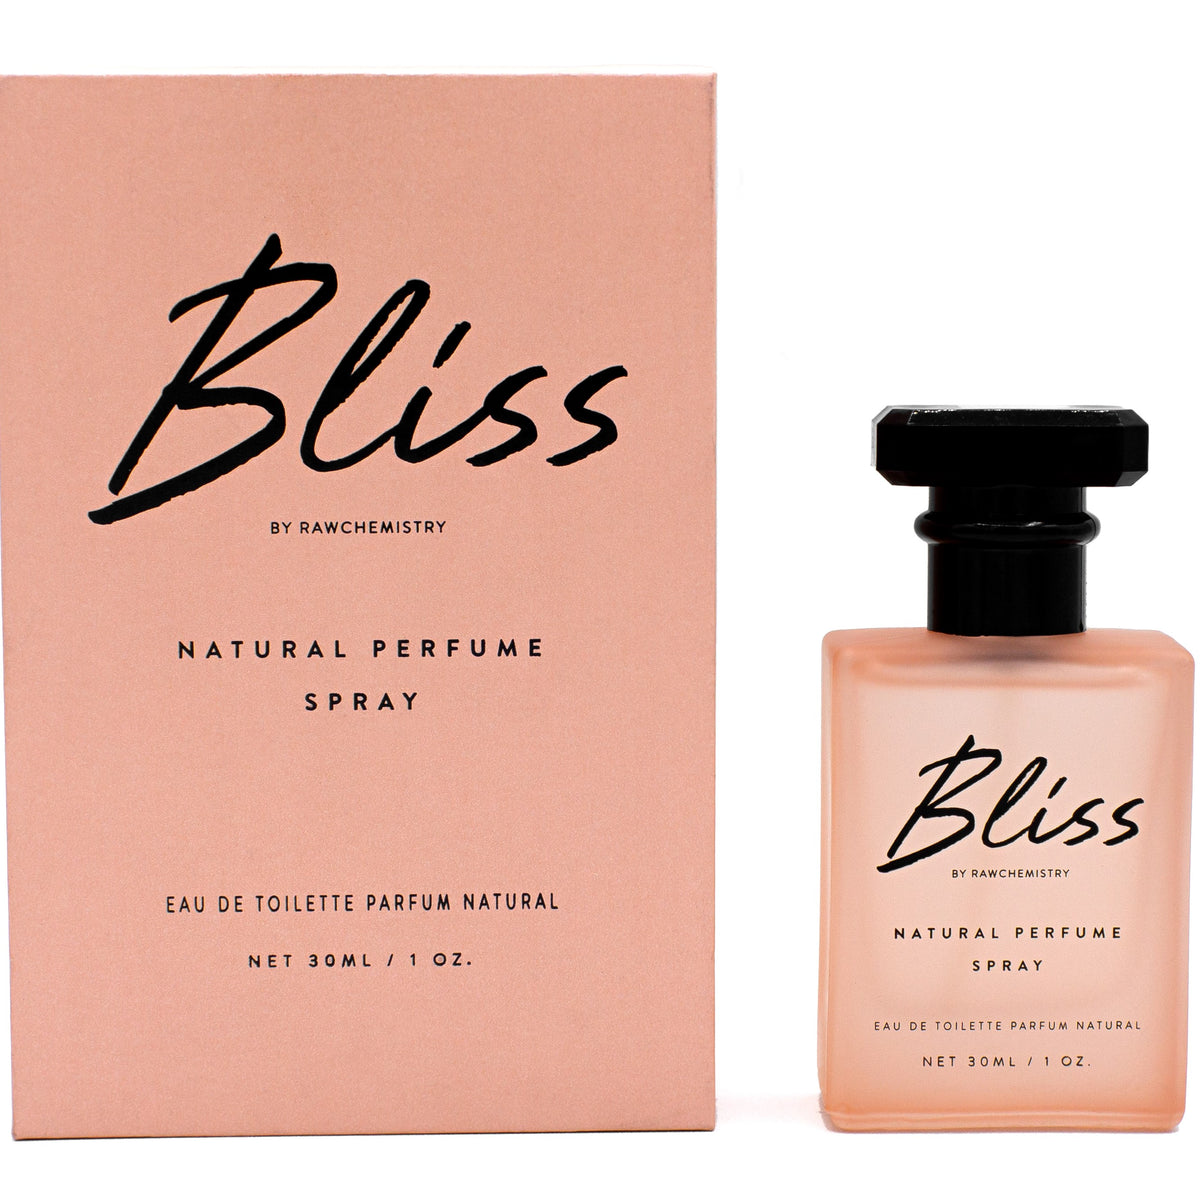 RawChemistry Bliss and Delight Pheromone Perfume Gift Set